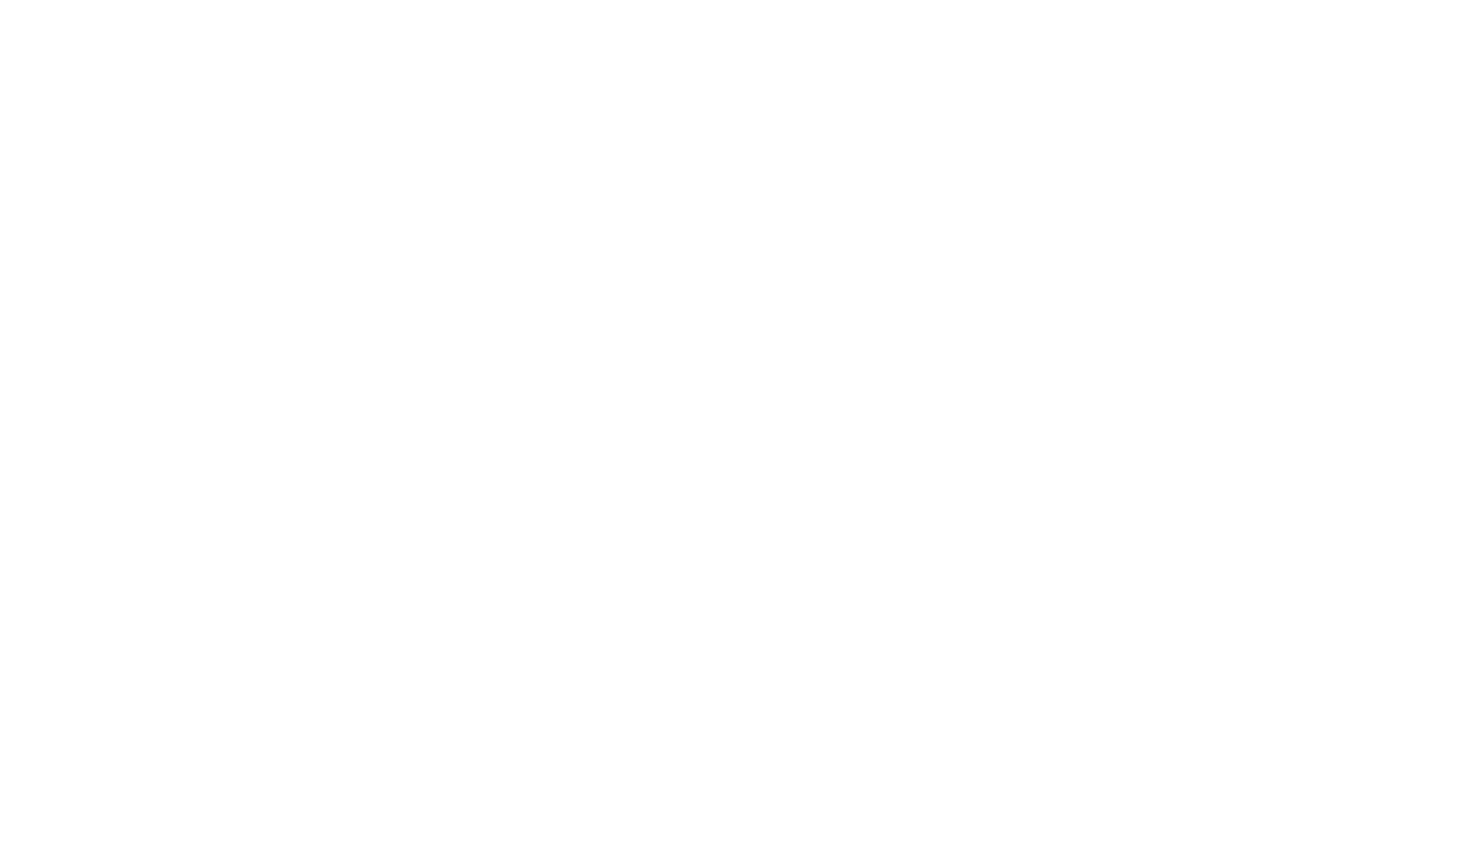 BSI ISO27001 certification kitemark